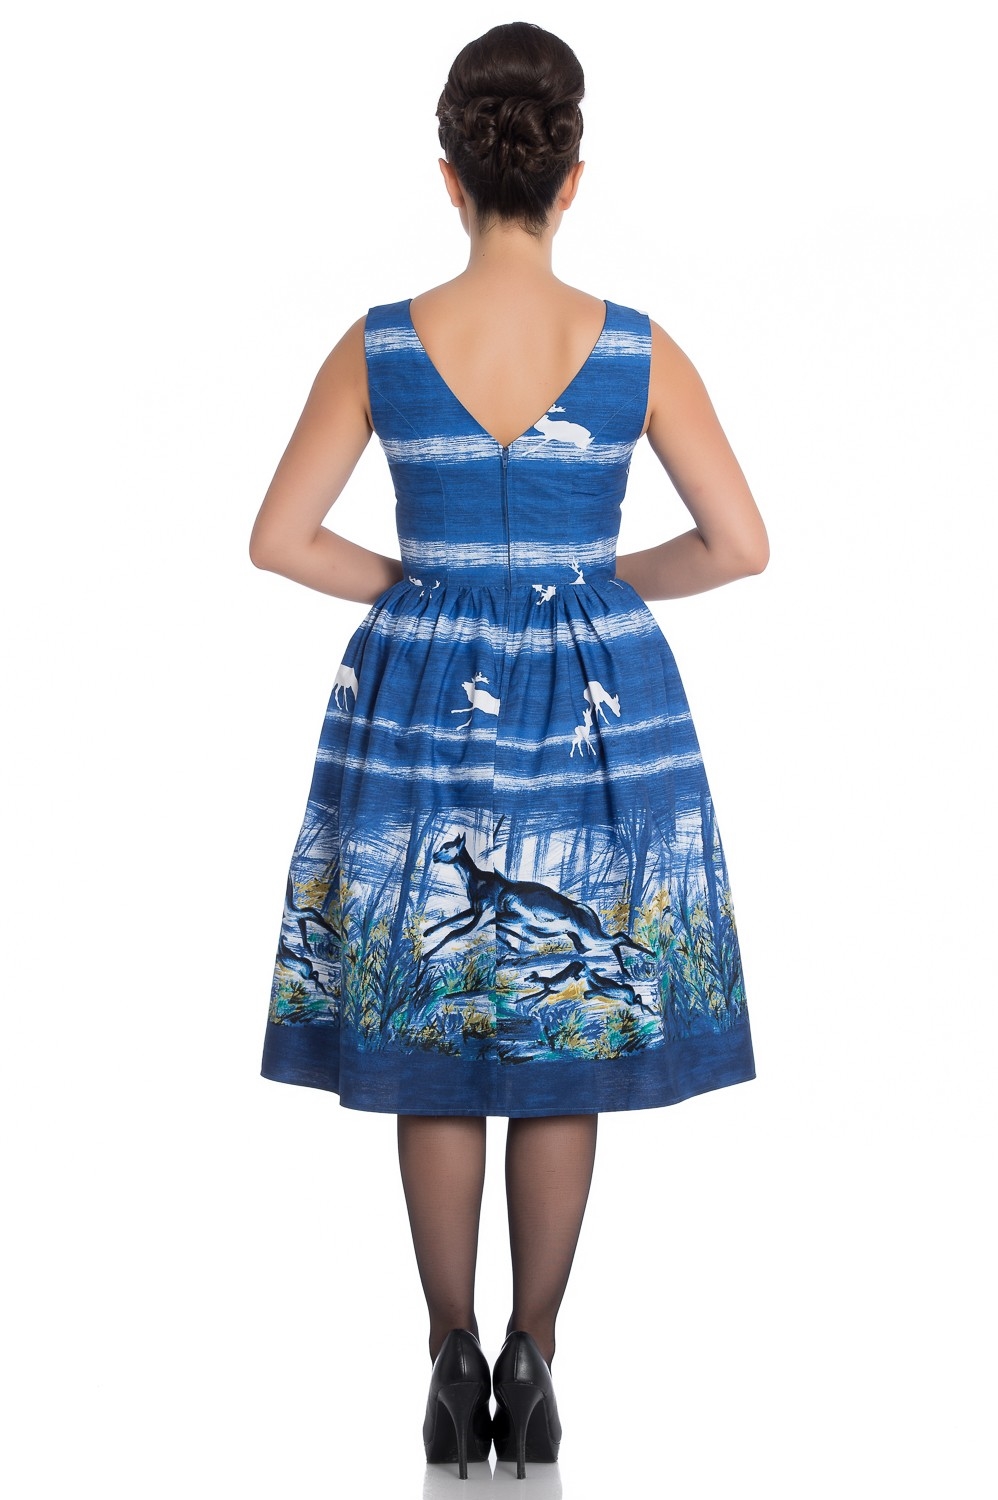 Montana kjole, blå - sød med efterårs/vintermotiv - Vi elsker alle årstider